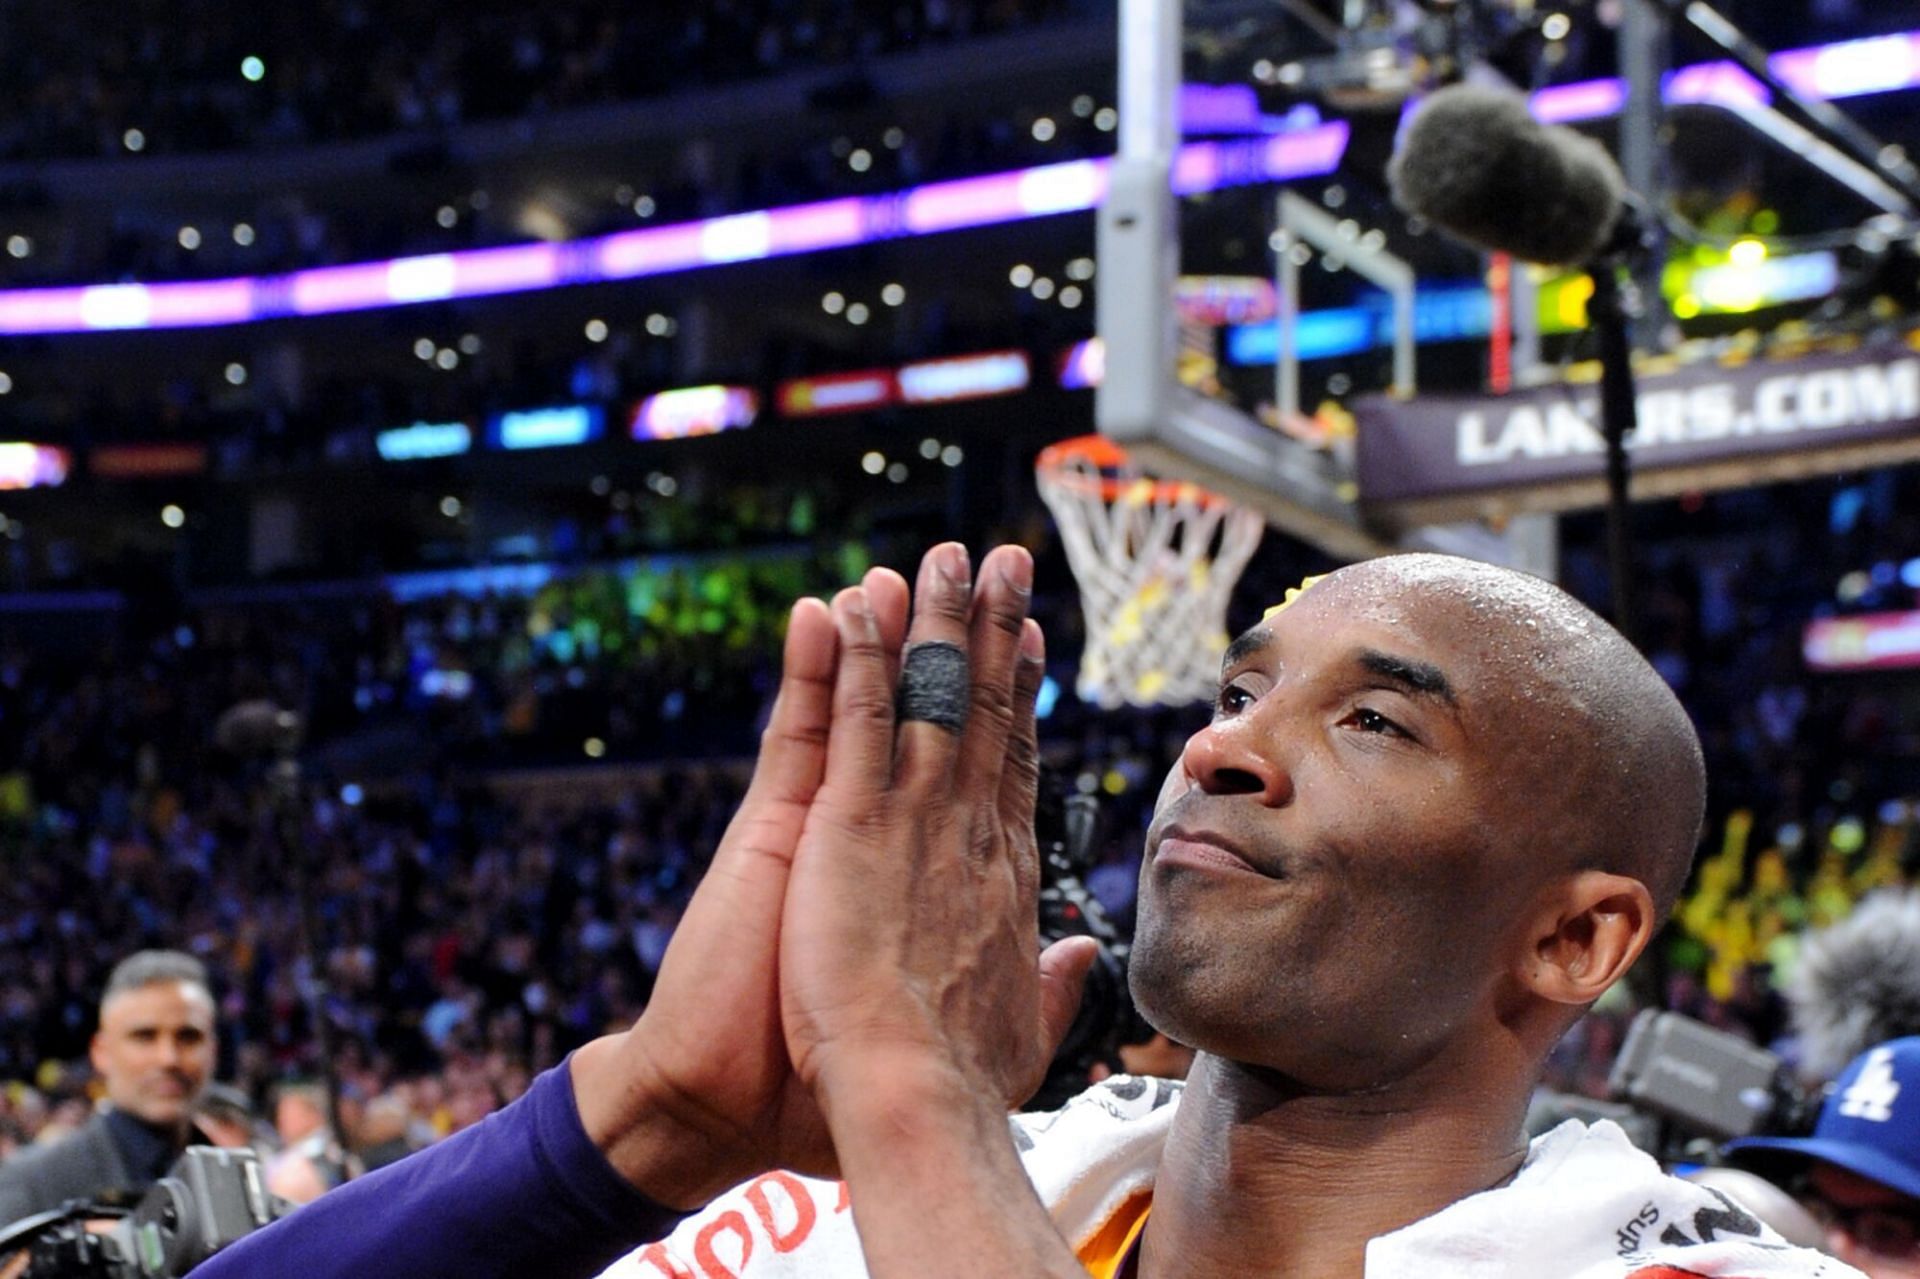 LA Lakers legendary shooting guard Kobe Bryant